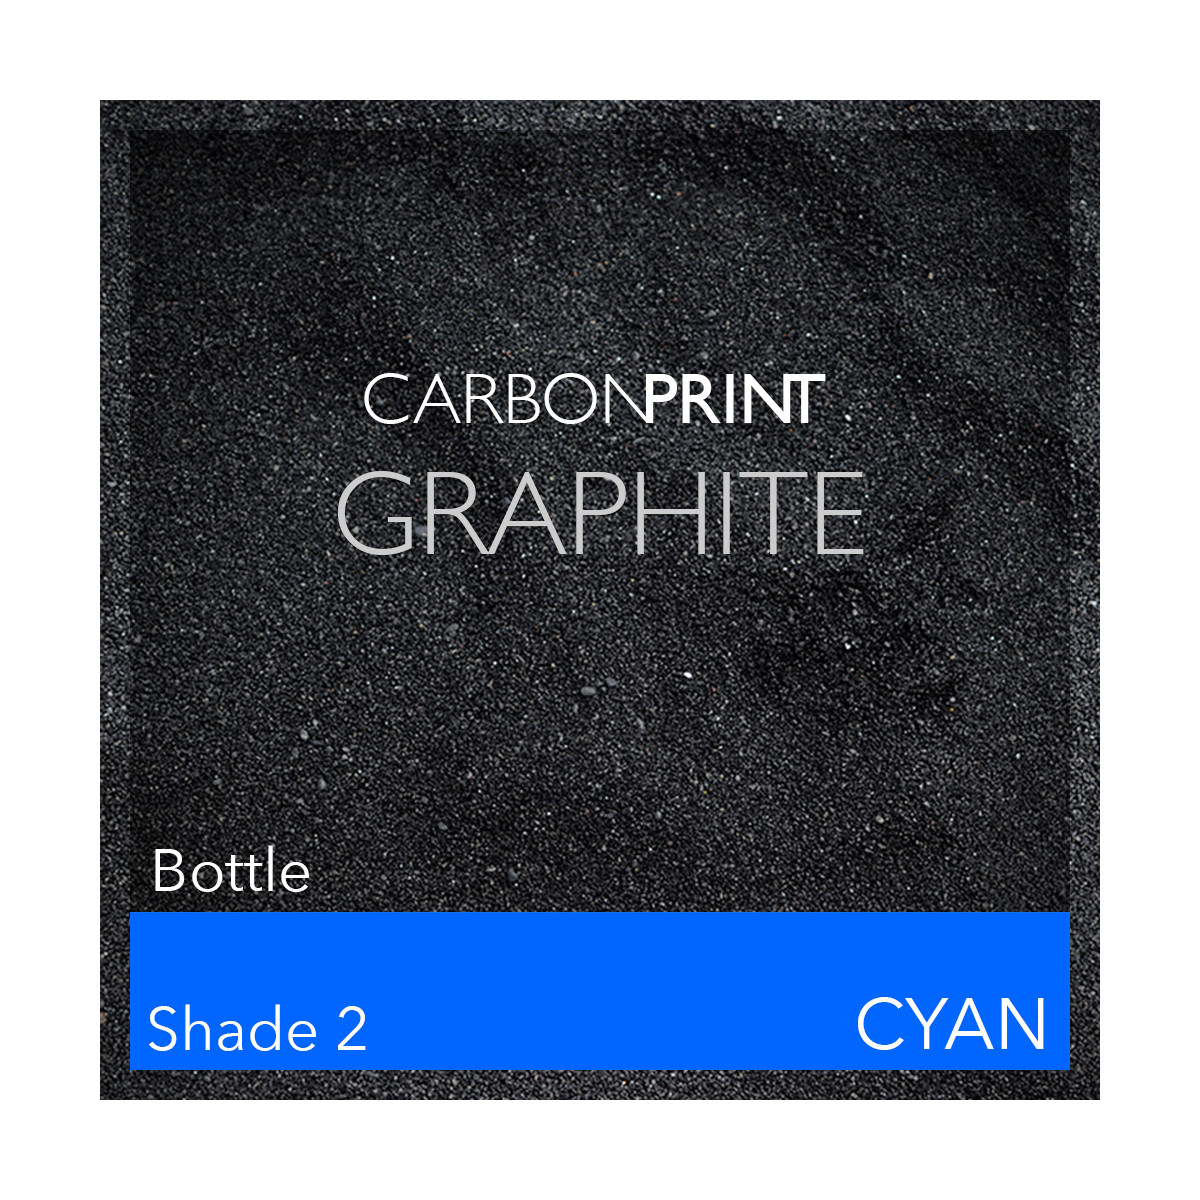 Carbonprint Graphite Shade2 Channel C